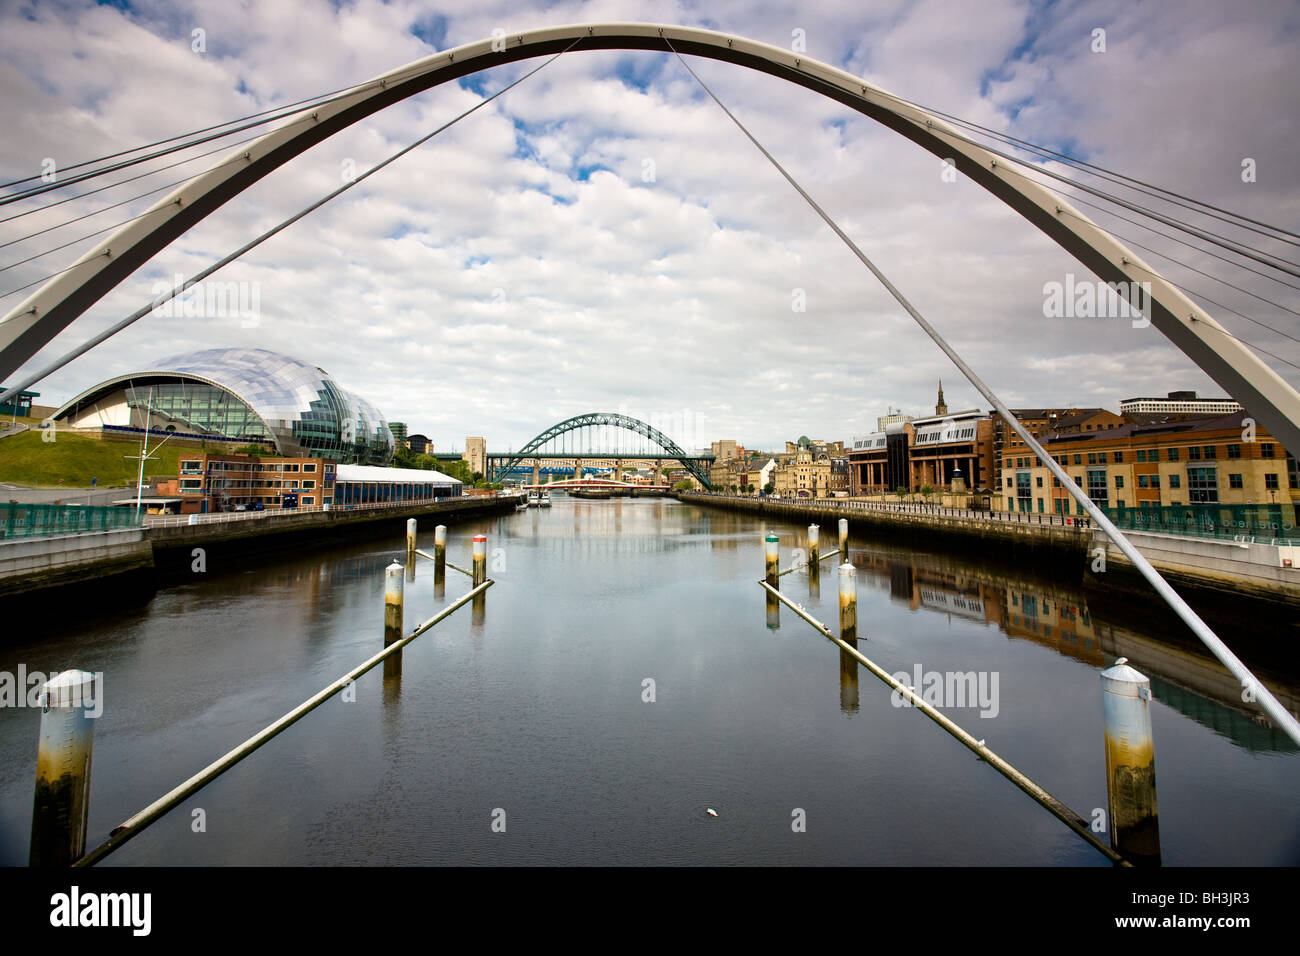 Gateshead Millenium Bridge with The Sage, Tyne and Bridges in the background, Newcastle-upon-Tyne, England Stock Photo